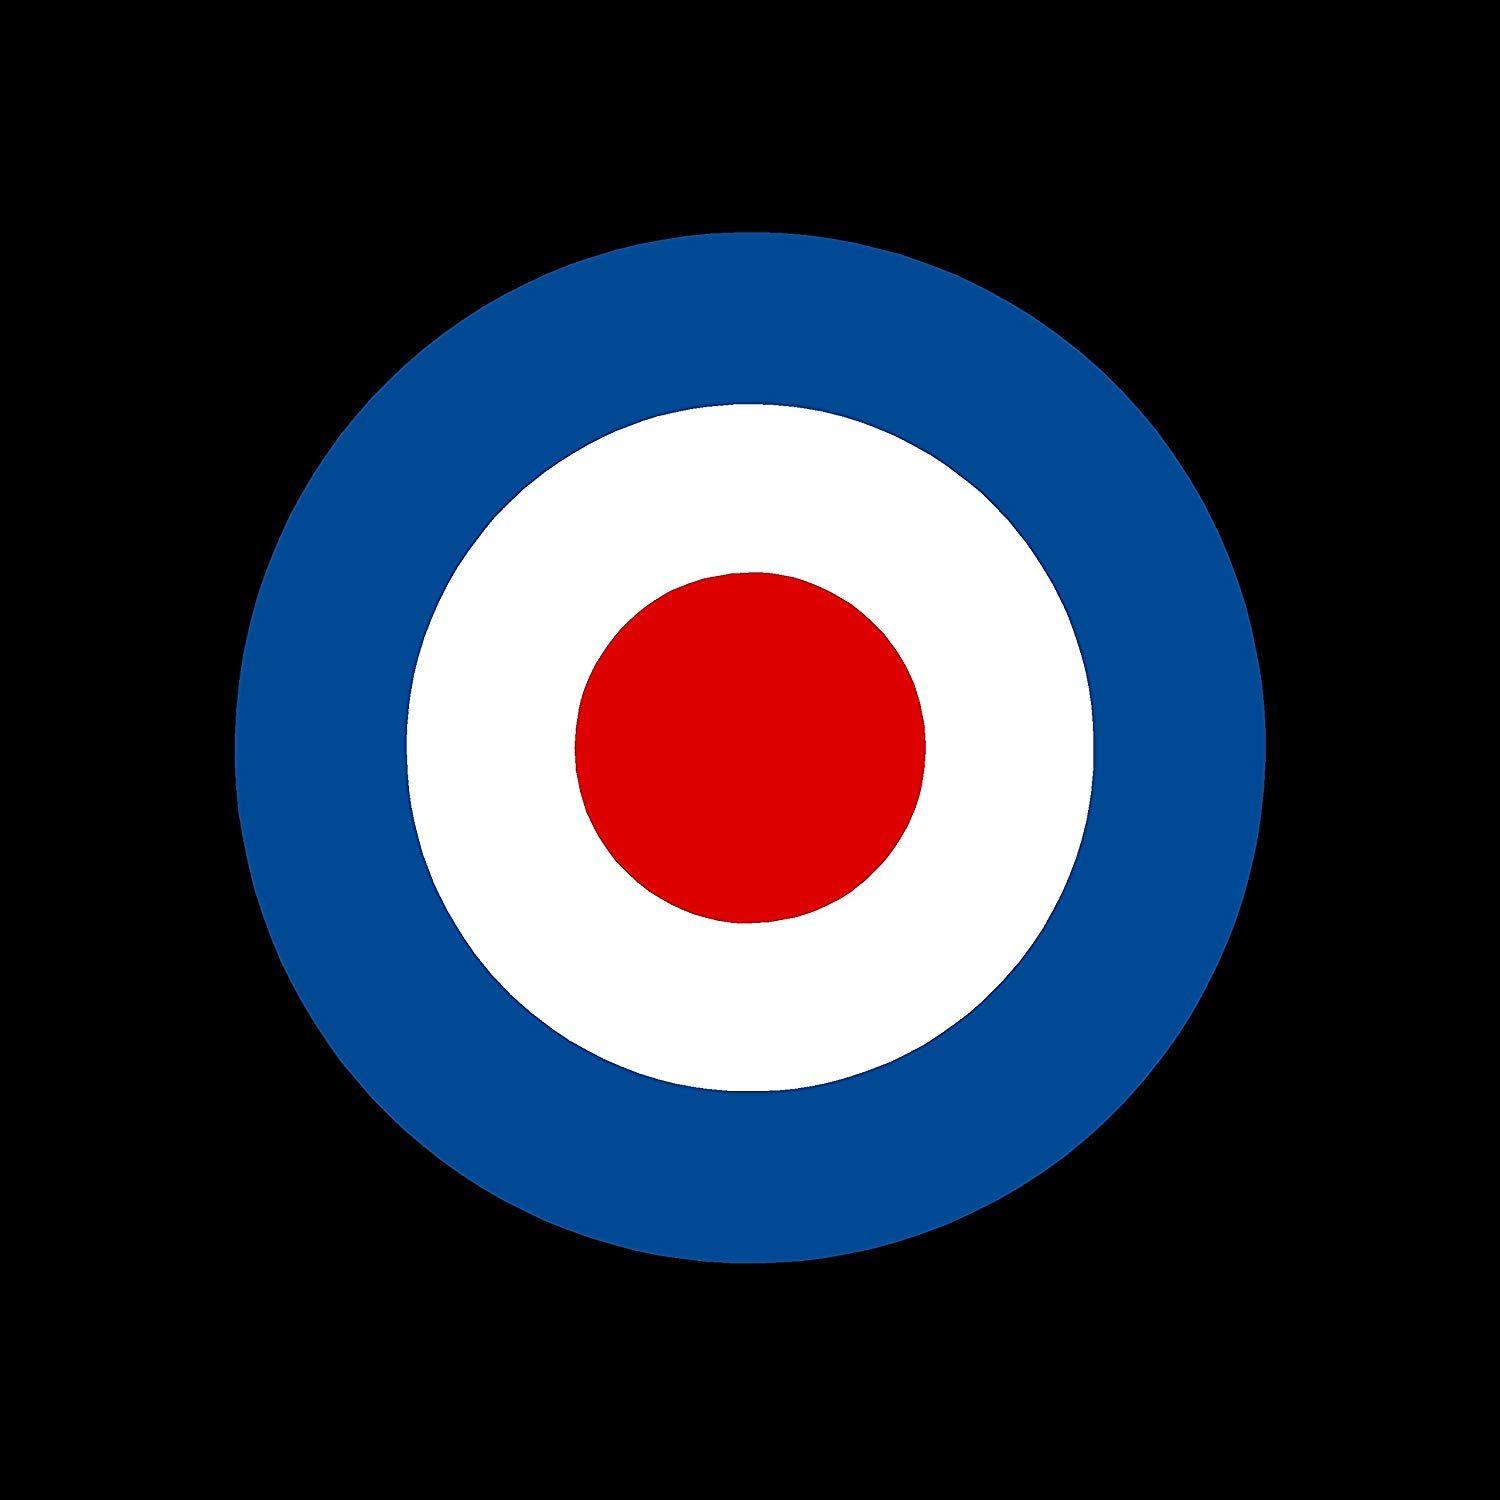 RAF Logo - Target RAF Royal Air Force Round Symbol Logo Sticker Decal Graphic Vinyl  Label